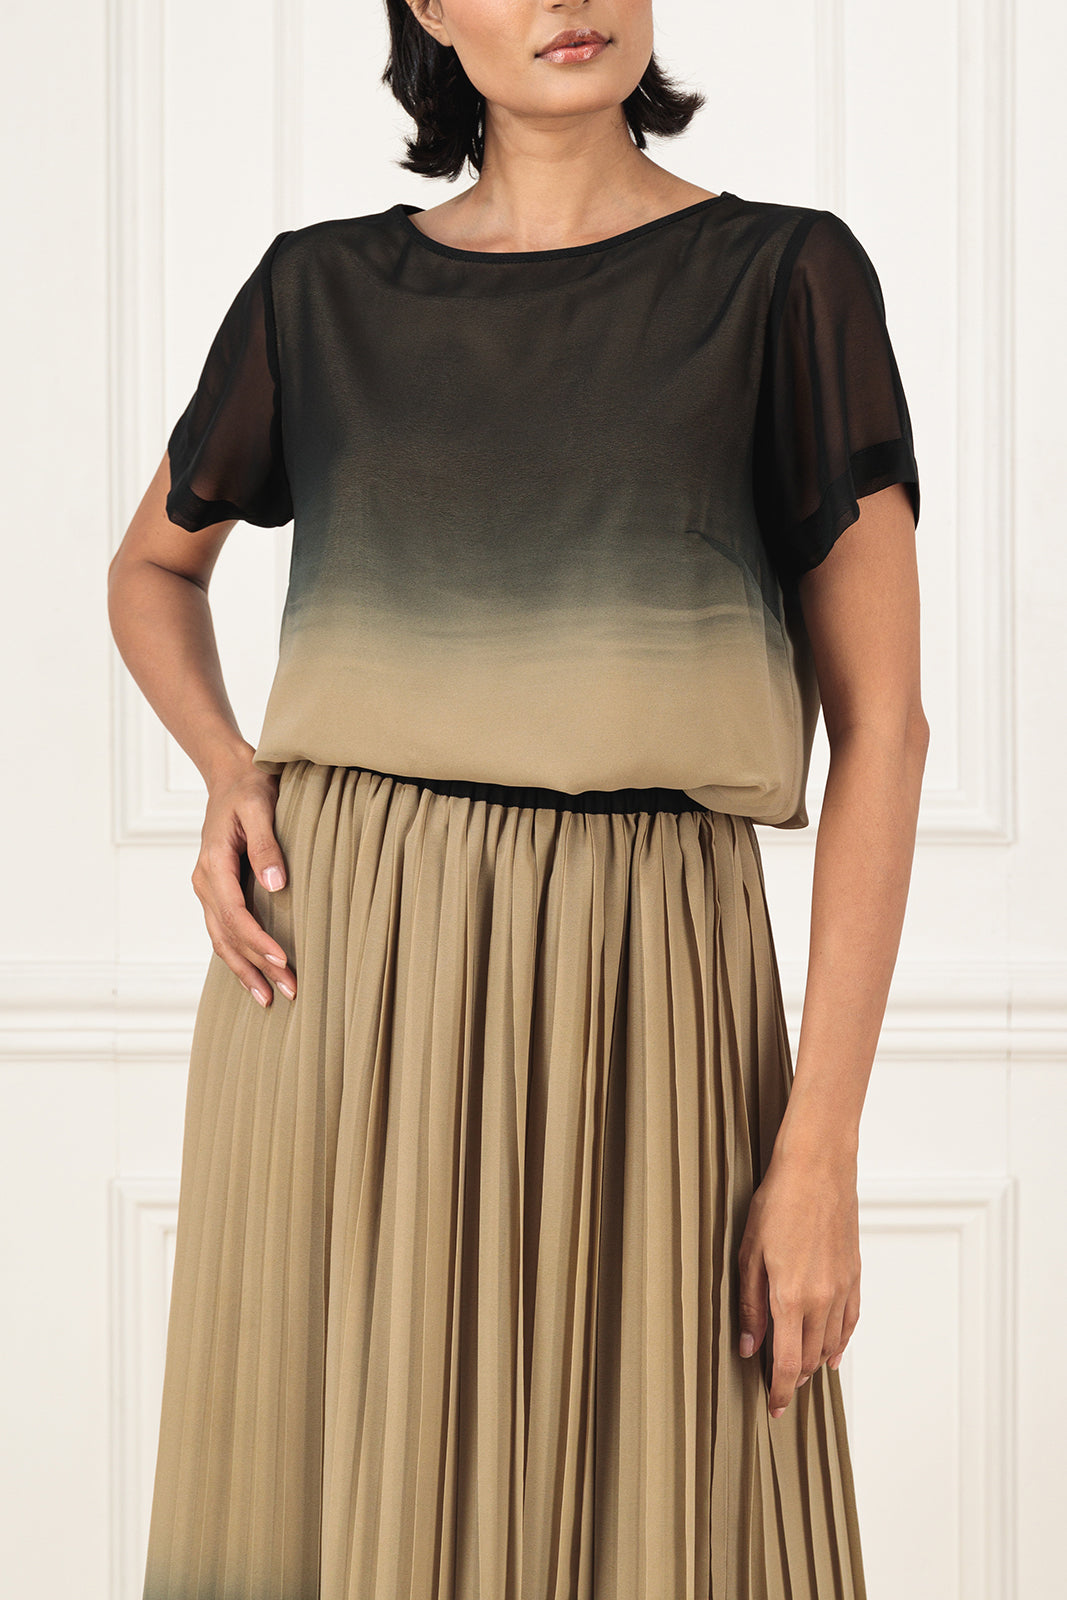 Ombre chiffon shirt and skirt (SET)